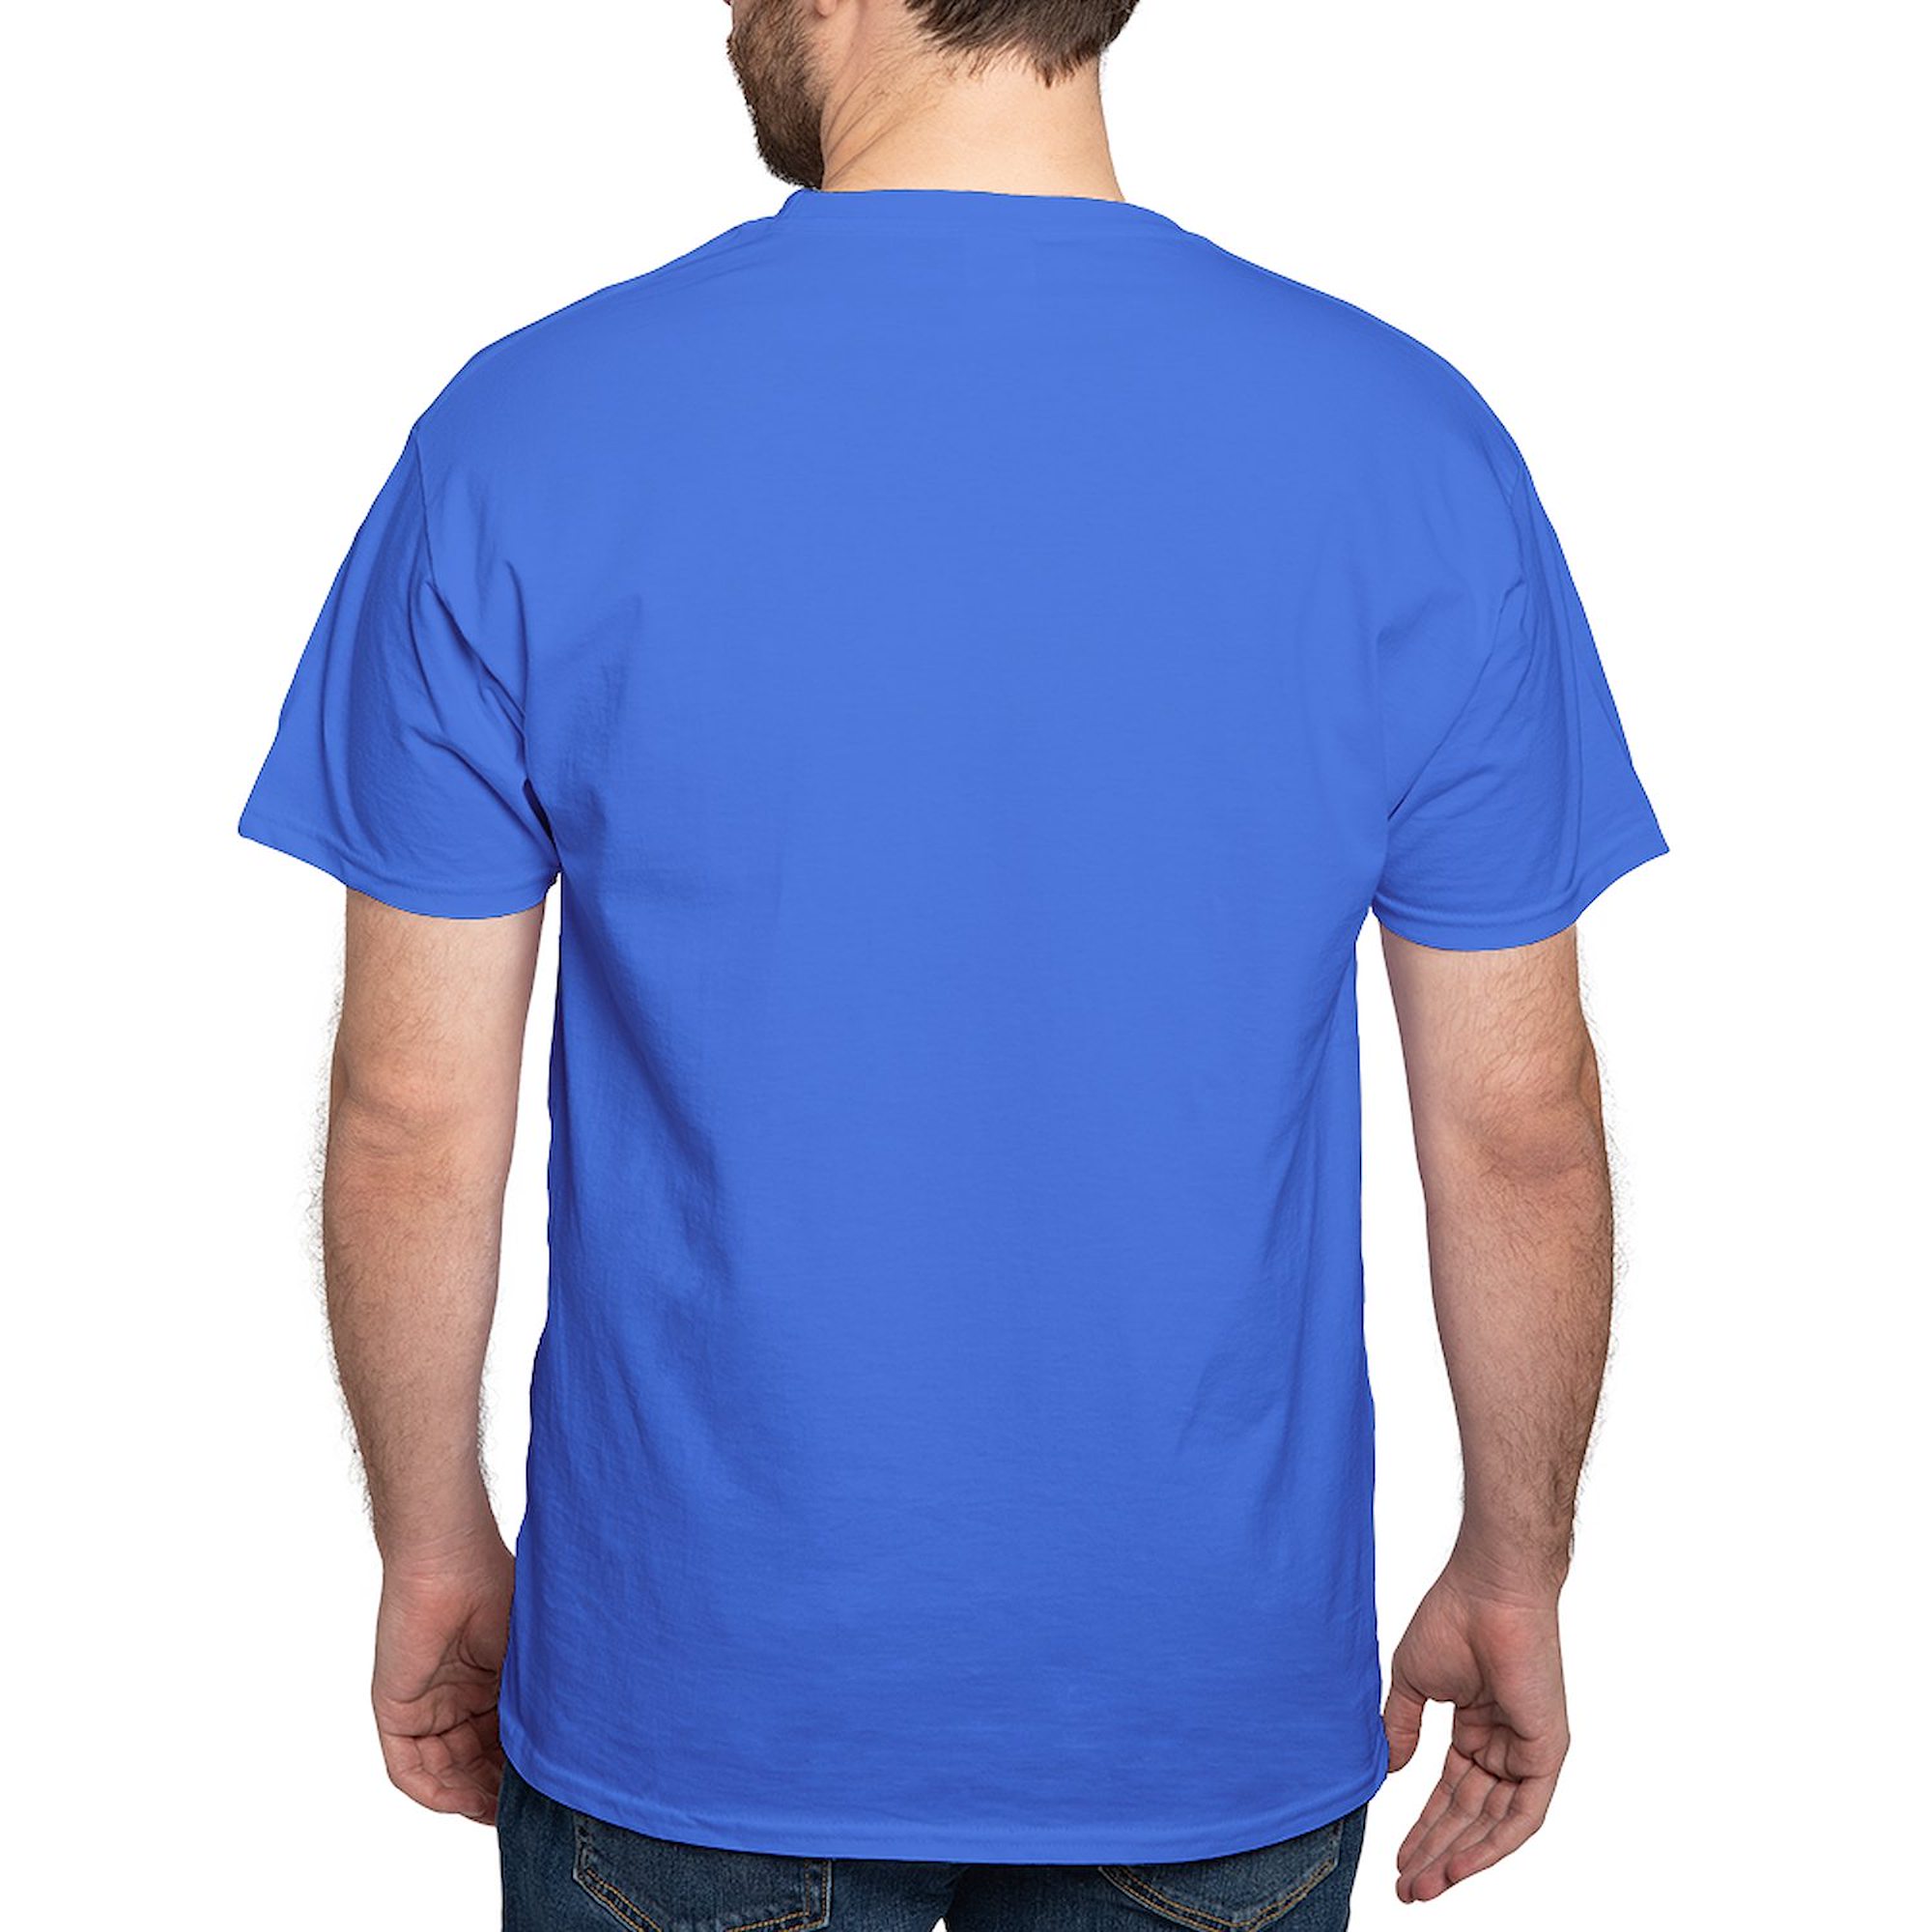 CafePress - Old School T Shirt - 100% Cotton T-Shirt - image 2 of 4